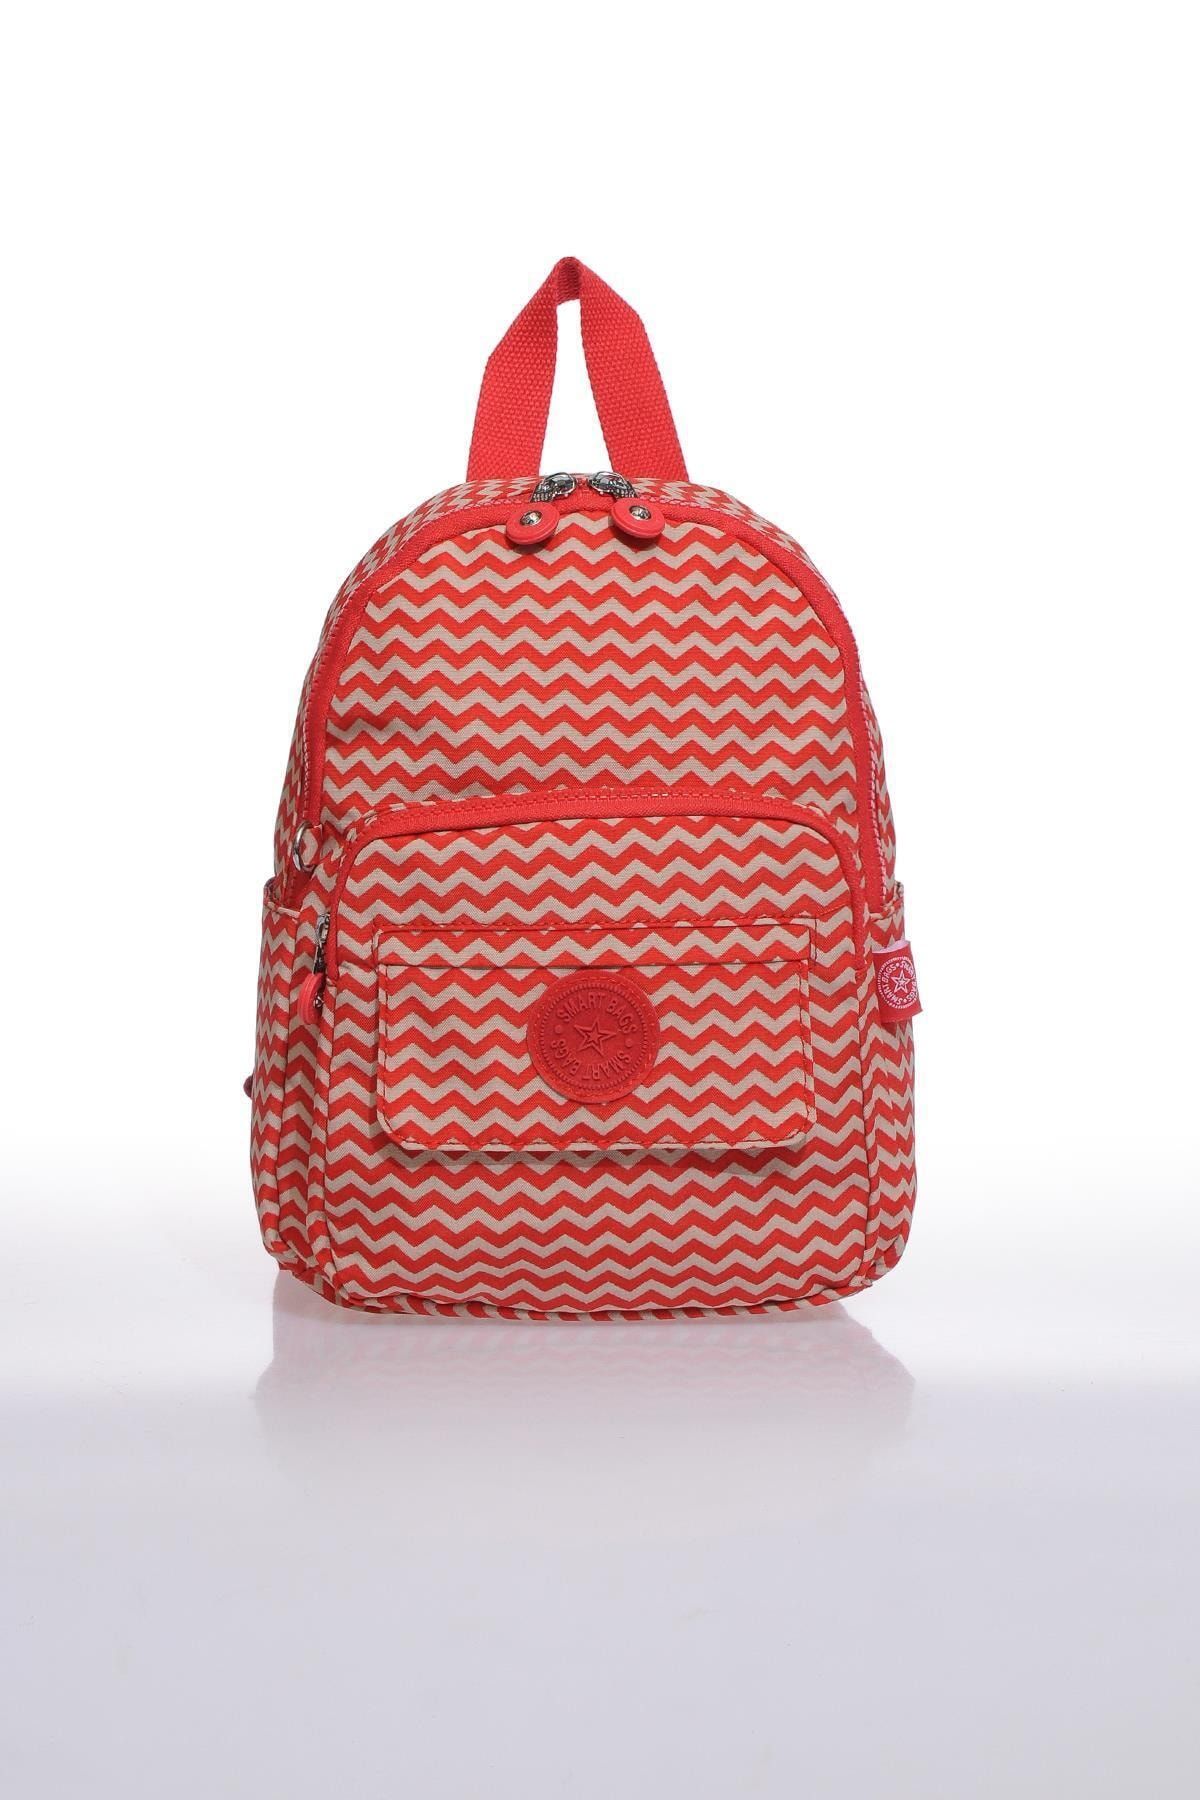 Smart Bags Smb3028-0134 Kırmızı/bej Kadın Küçük Sırt Çantası